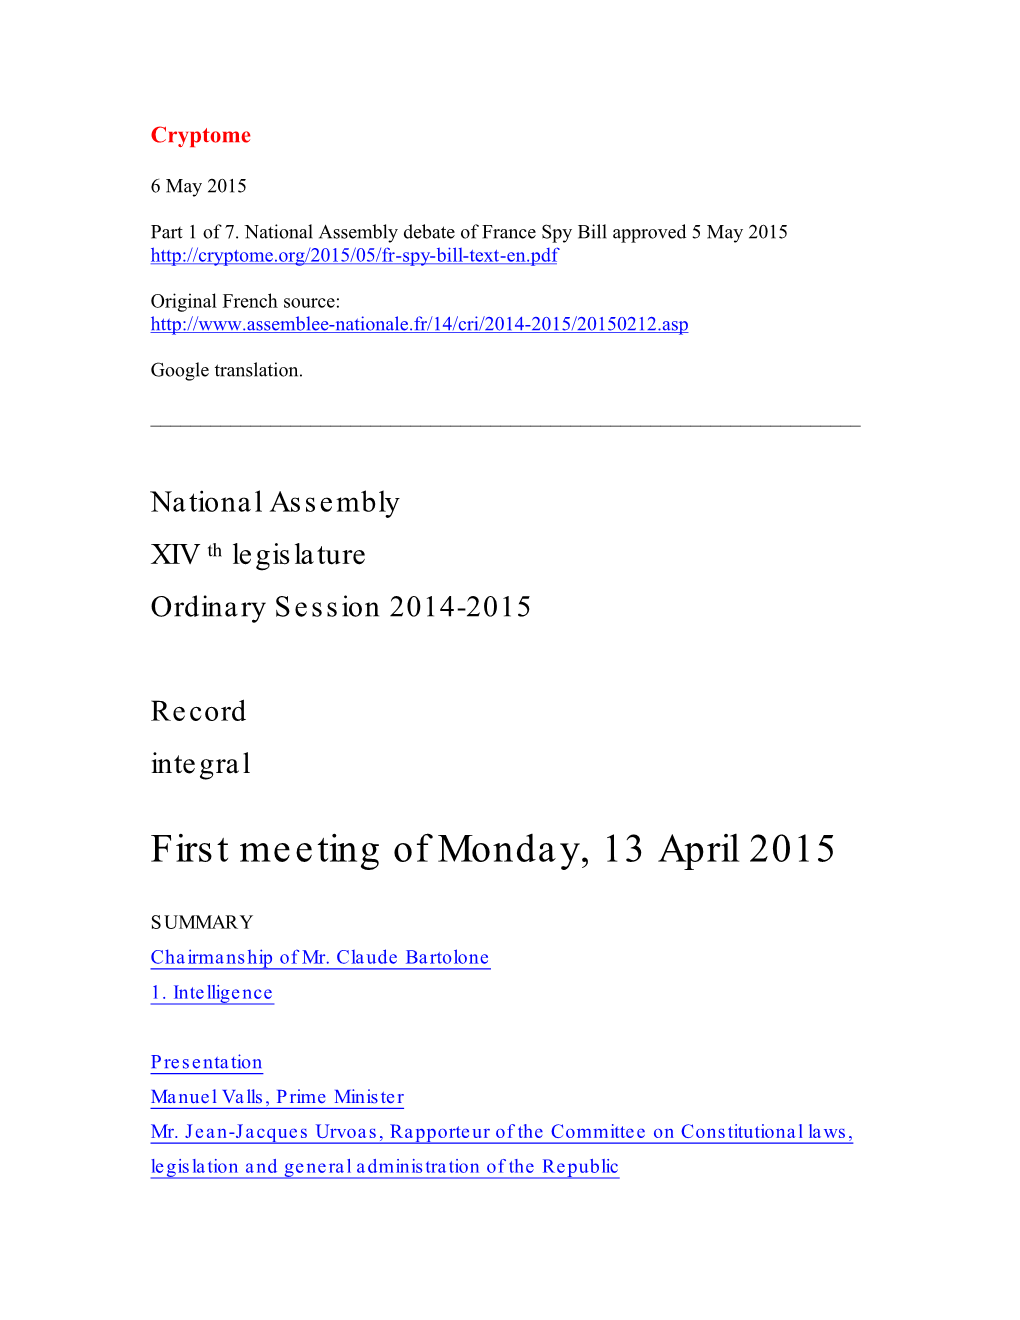 First Meeting of Monday, 13 April 2015